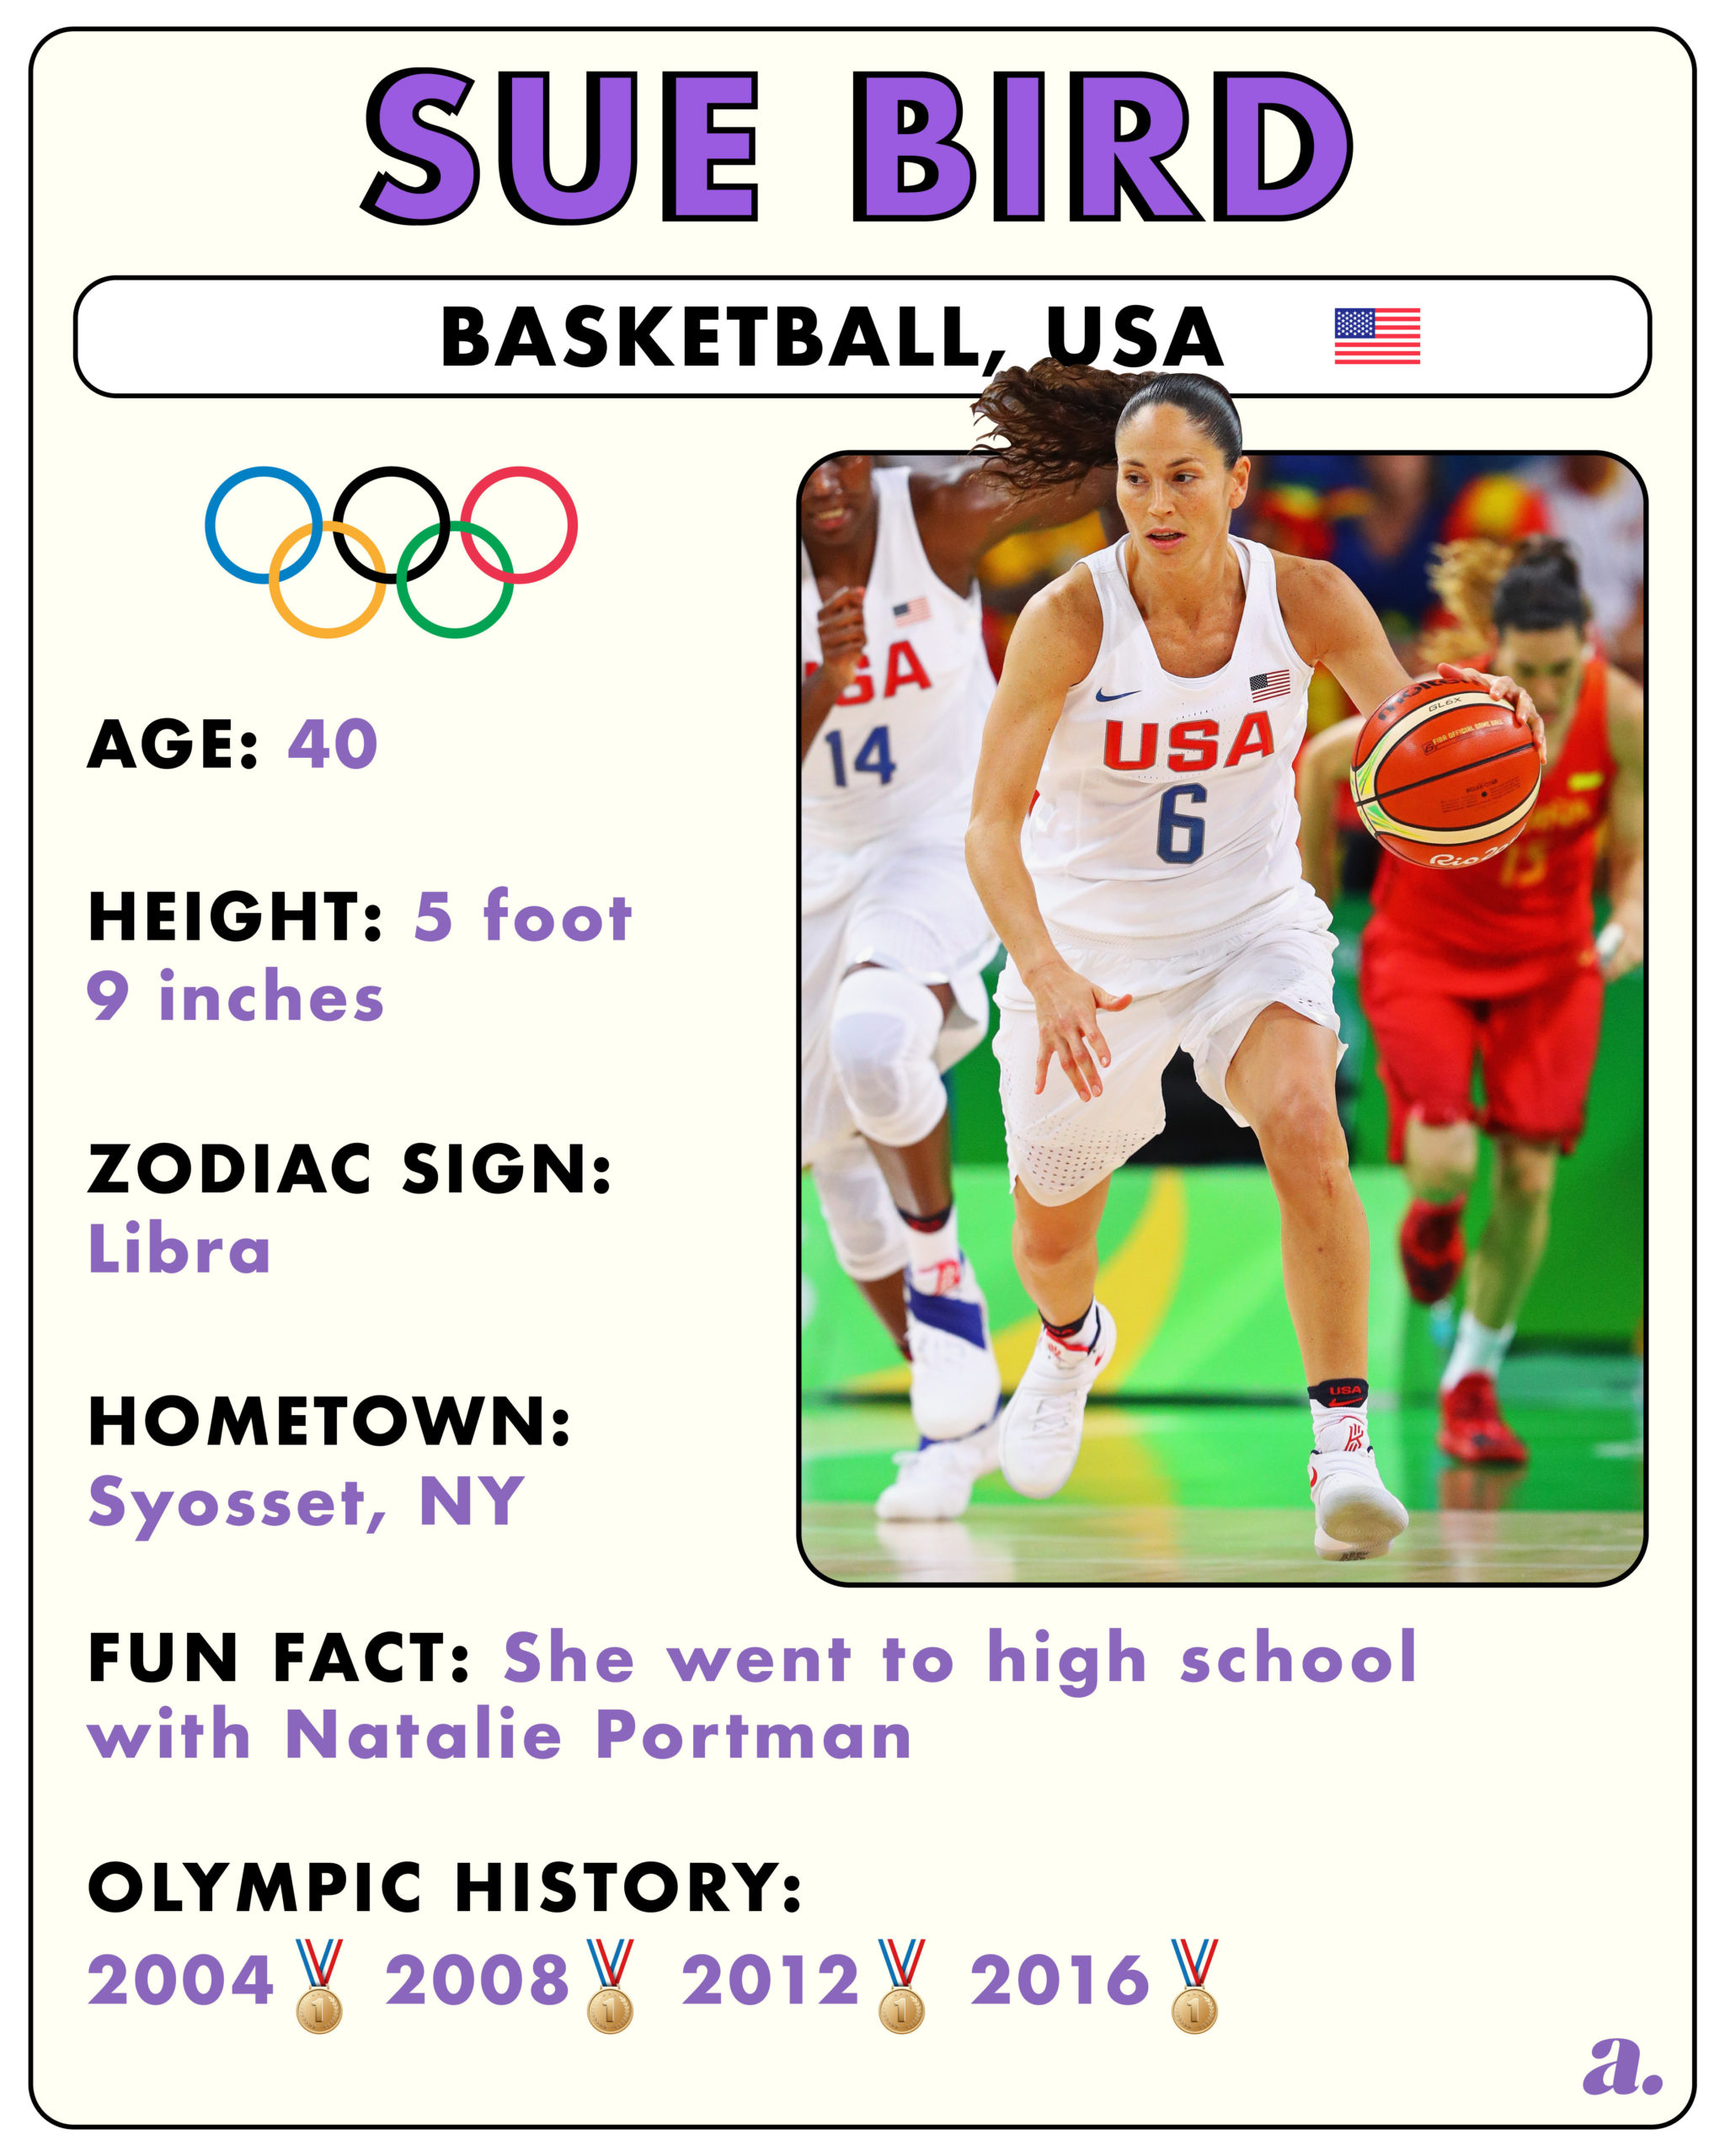 Basketball jersey, Sue Bird of the 2012 Women's Olympic Basketball